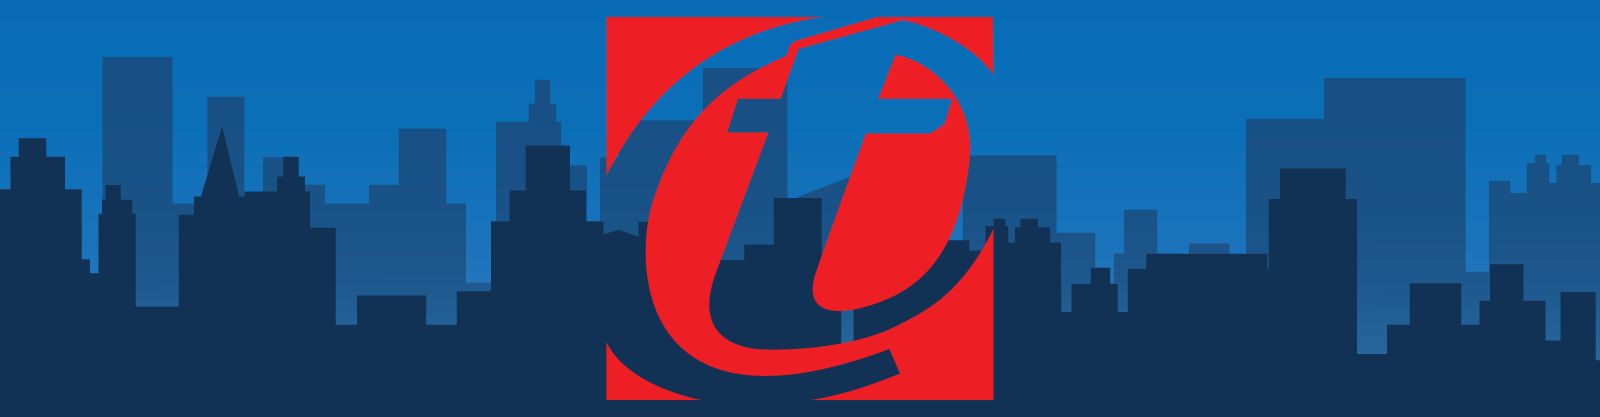 Trenton Printing Logo